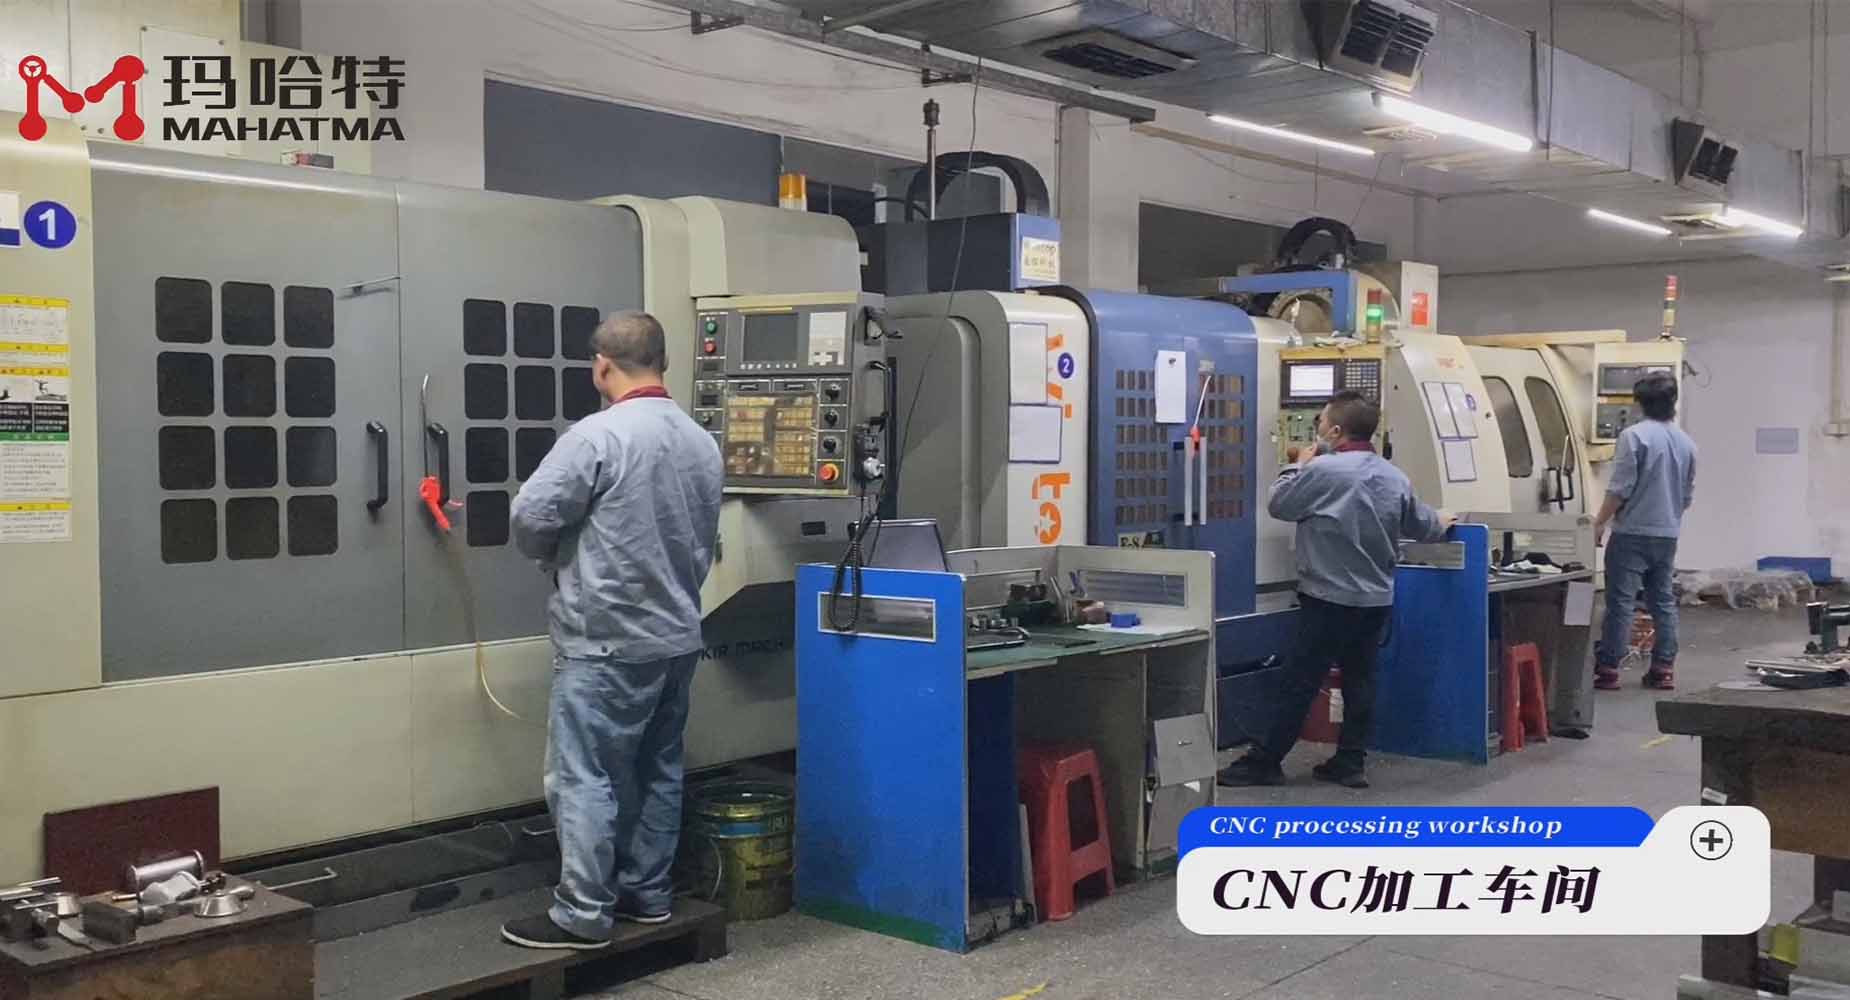 CNC processing workshop.jpg